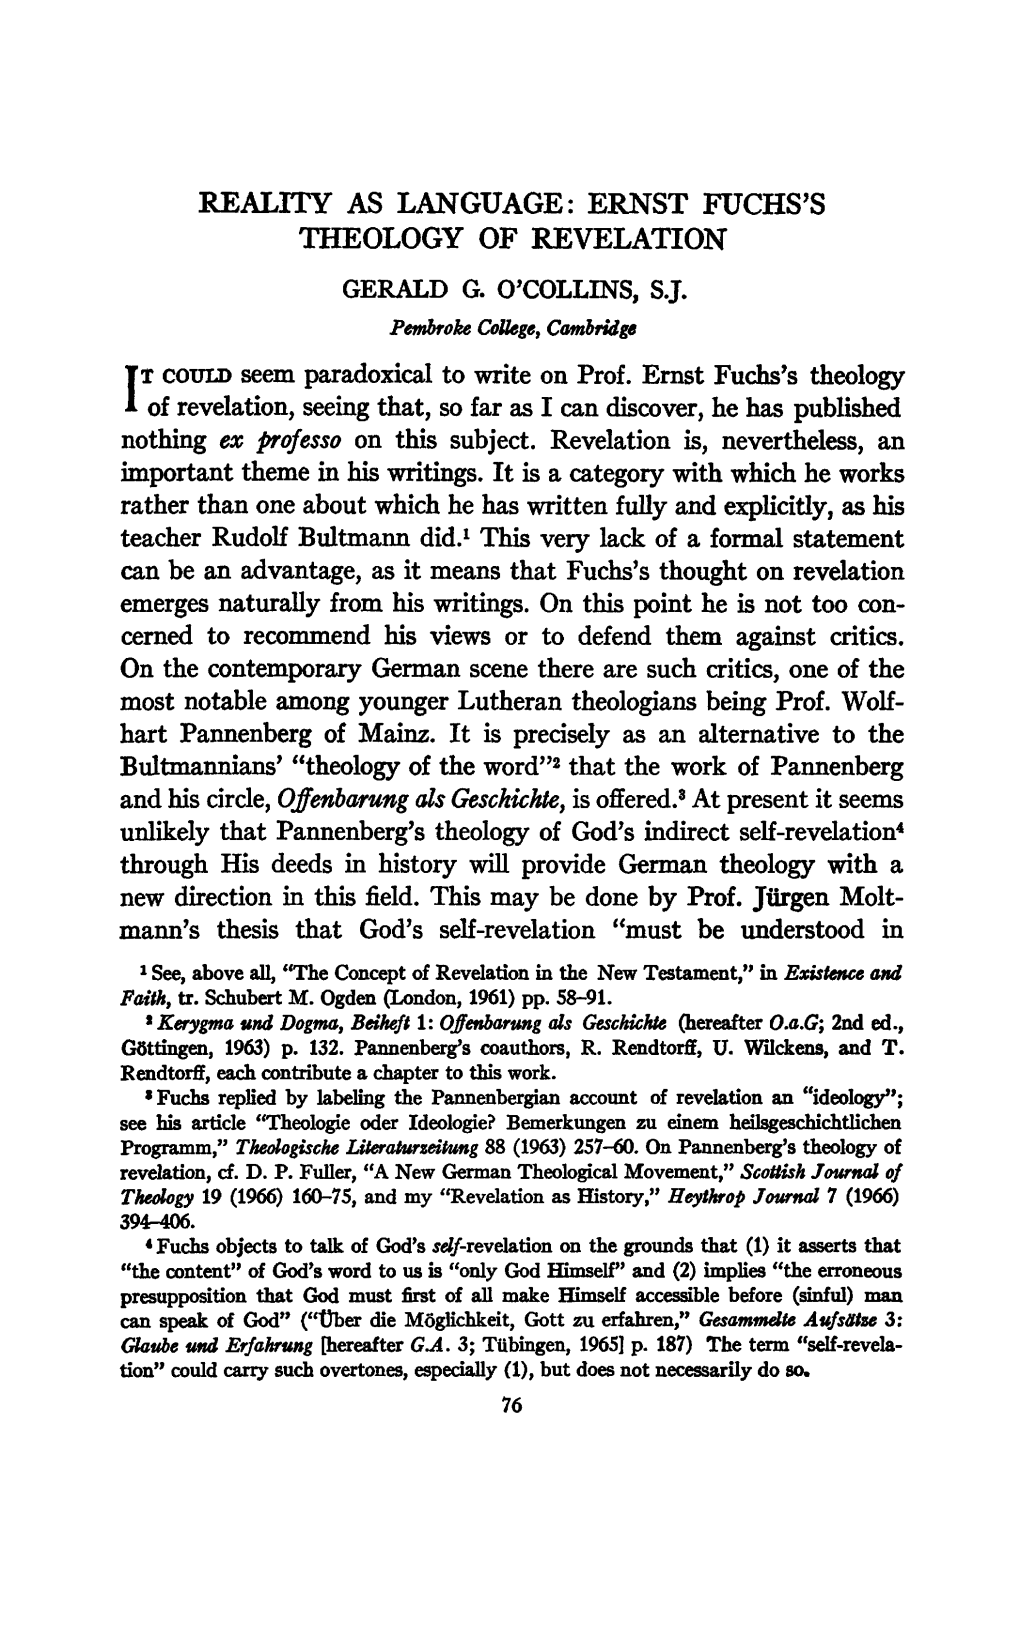 Ernst Fuchs's Theology of Revelation Gerald G